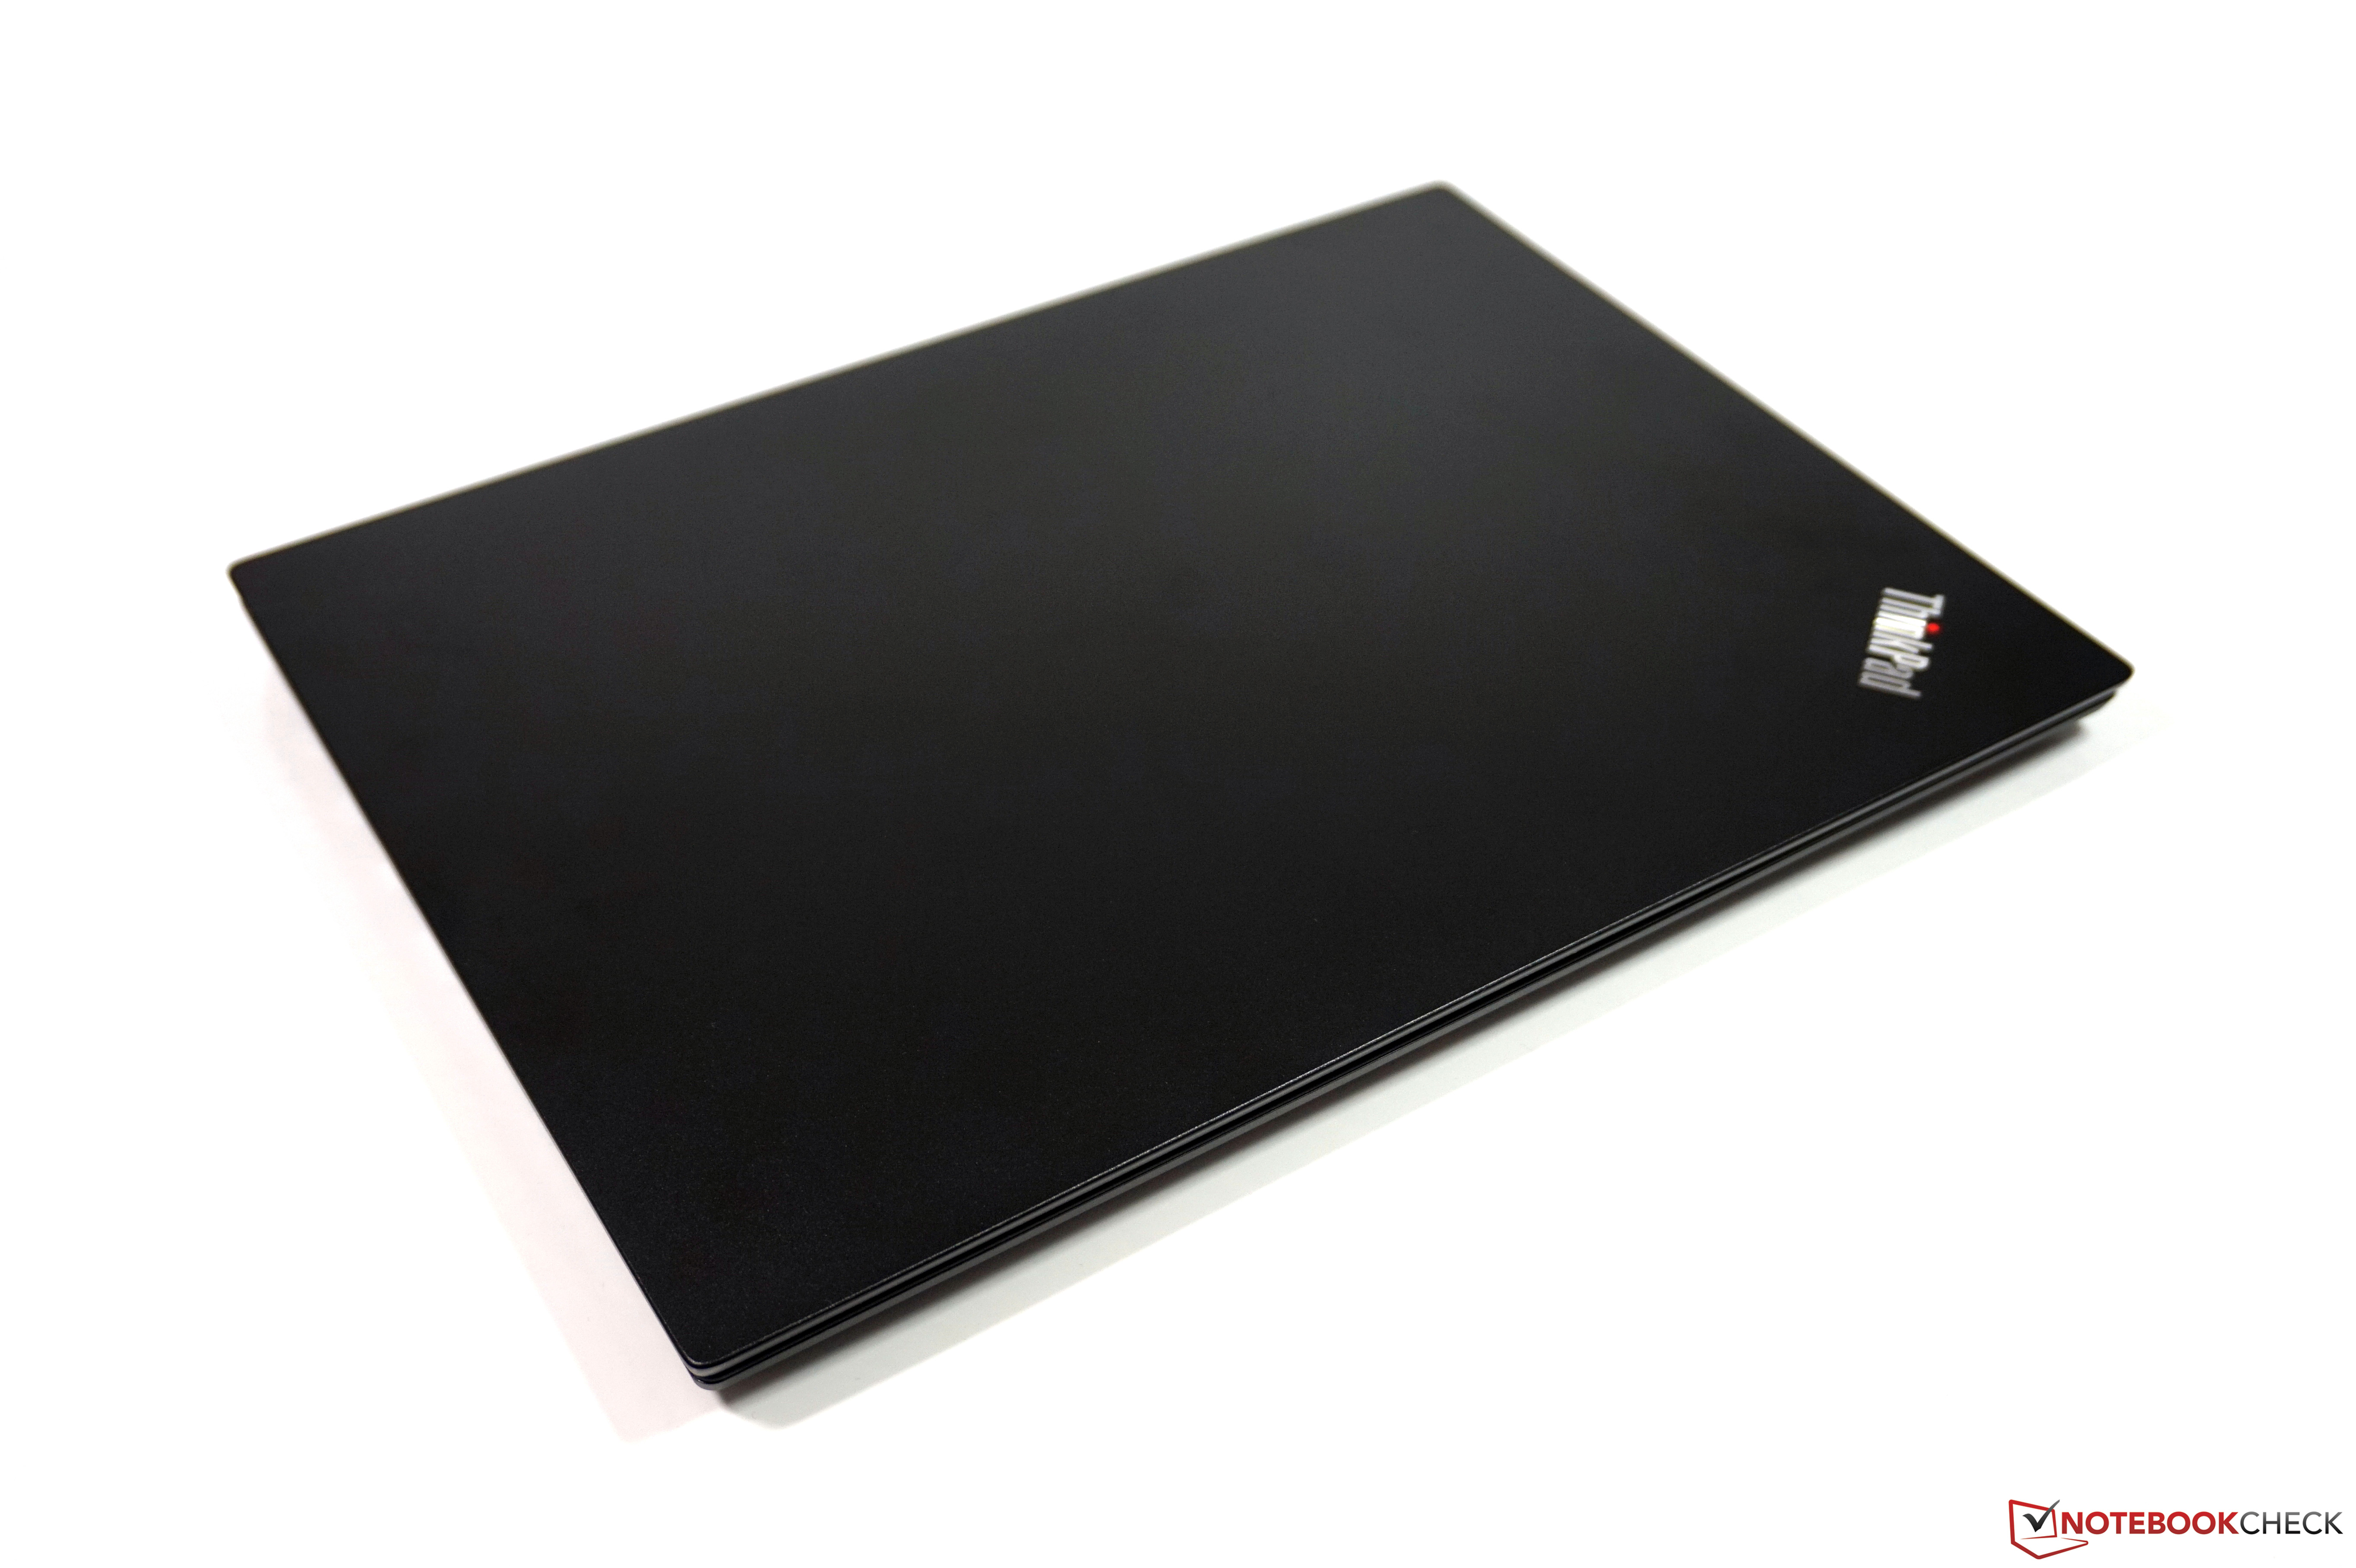 Lenovo ThinkPad E485 (Ryzen 5, Vega 8) Laptop Review - NotebookCheck ...